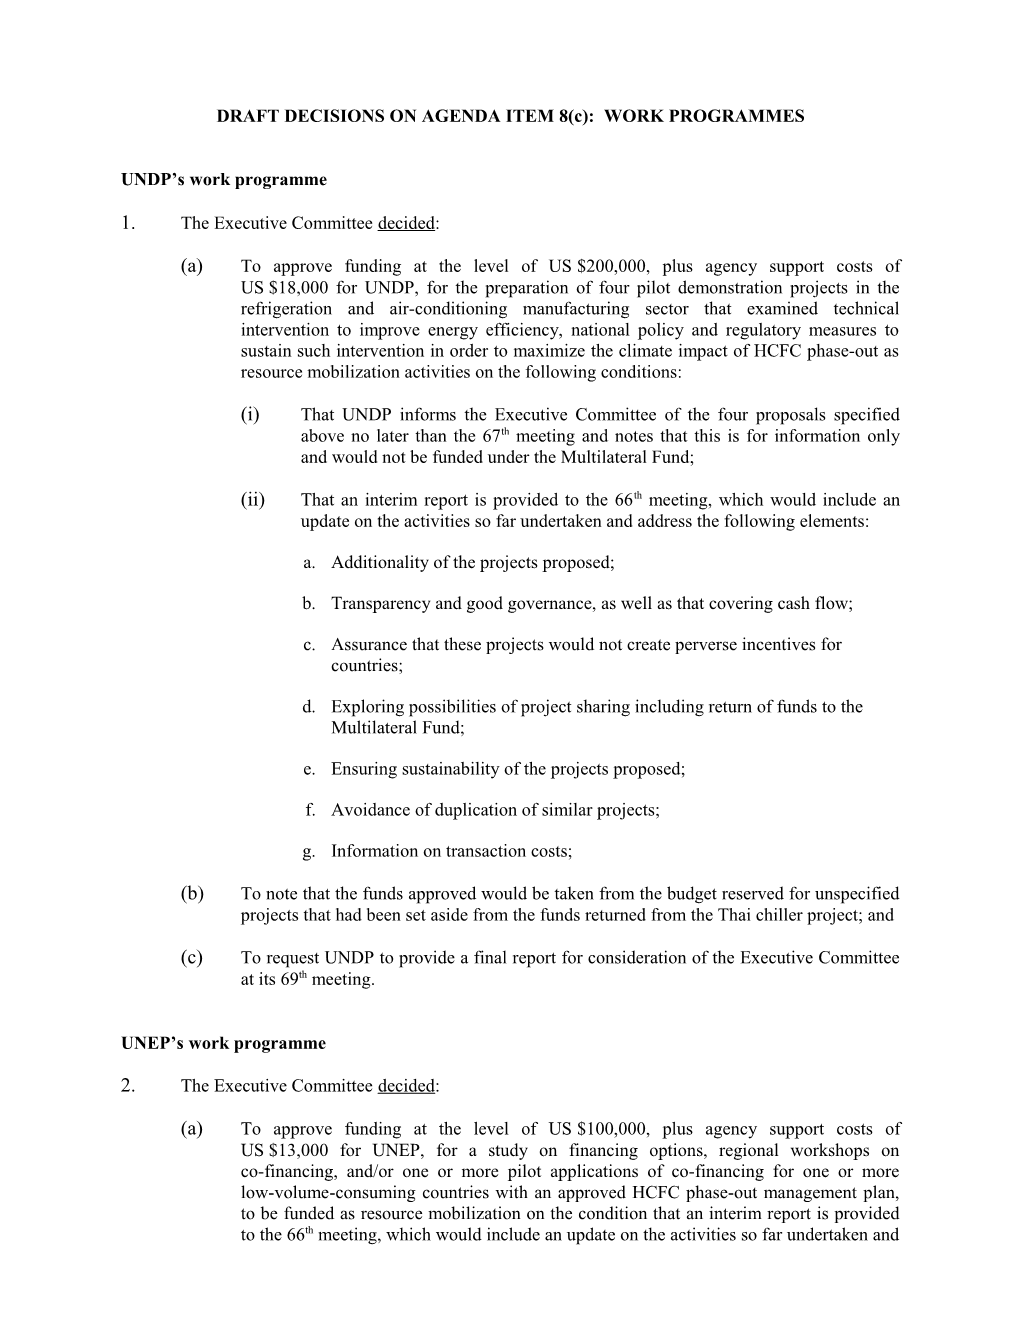 DRAFT DECISIONS on AGENDA ITEM 8(C): WORK PROGRAMMES